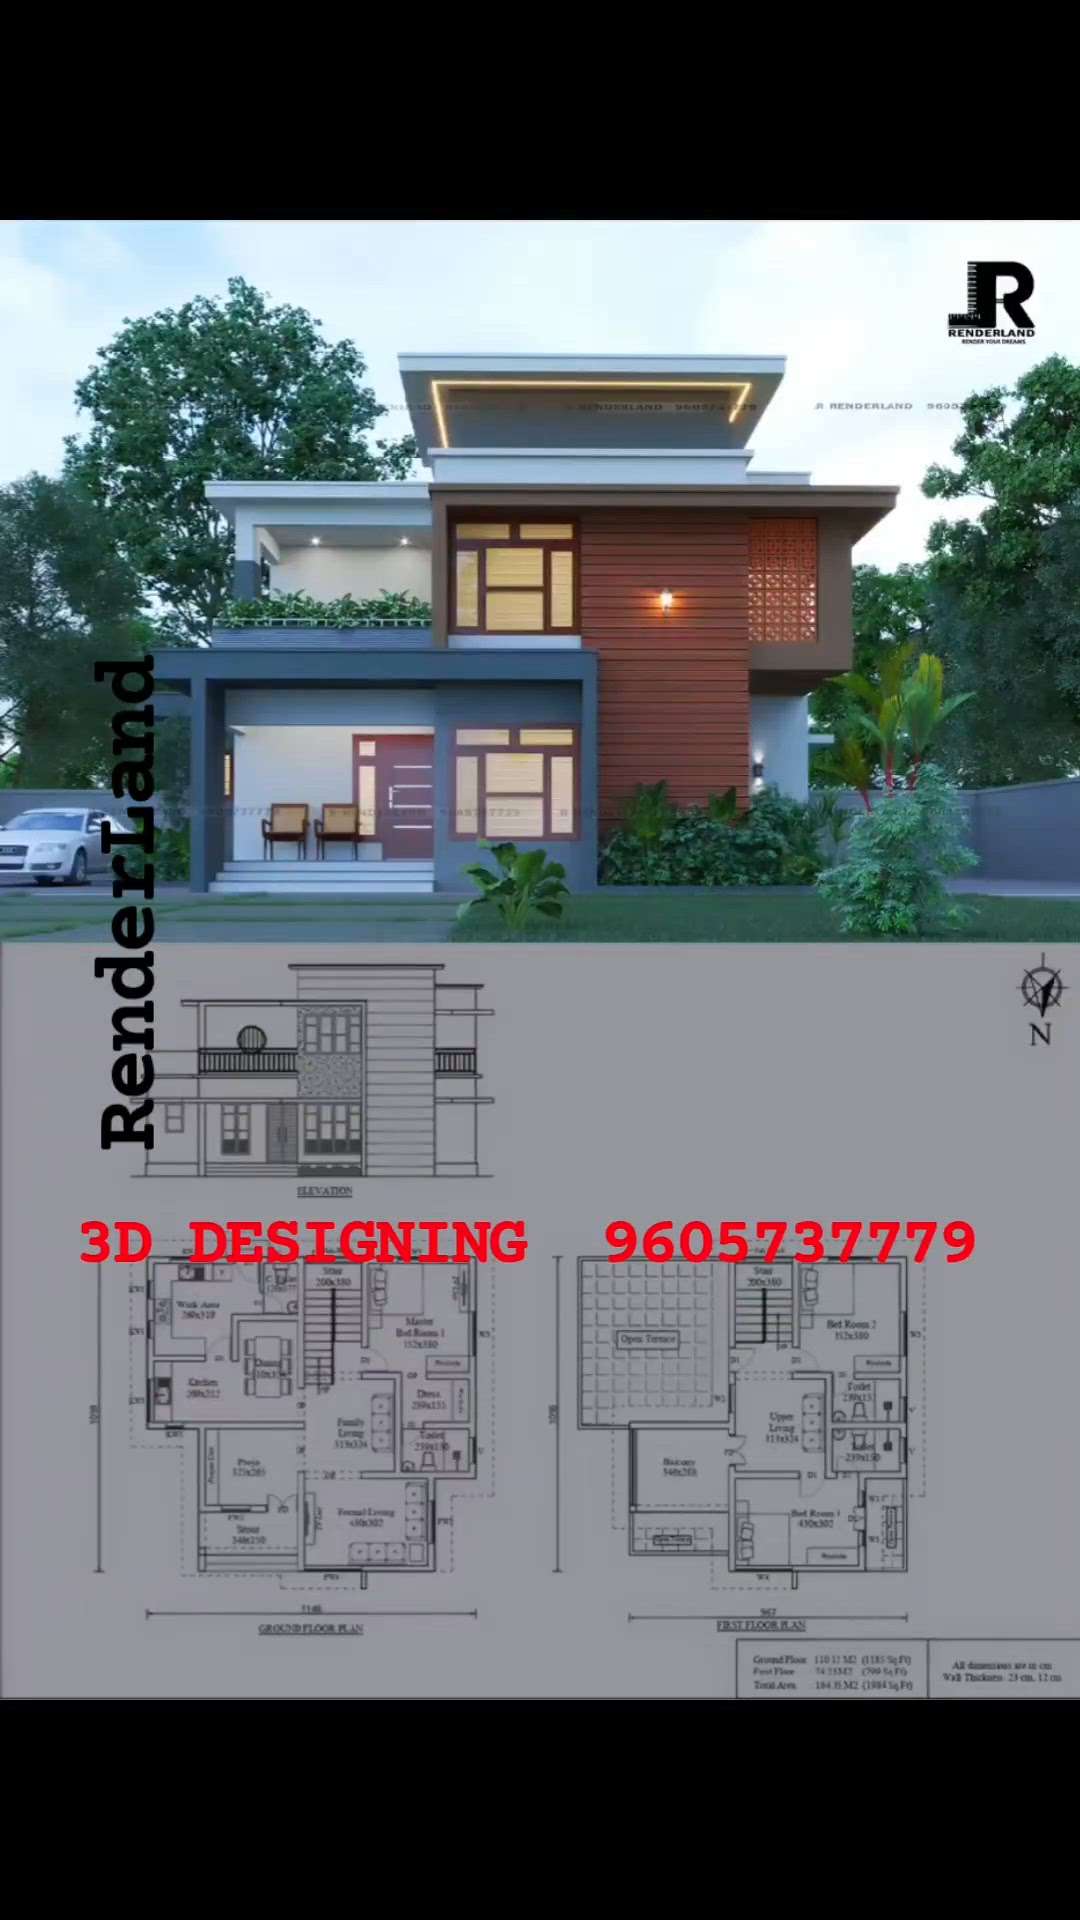 #ContemporaryDesigns  #contenporaryhouse  #KeralaStyleHouse  #keralaarchitectures  #keralastyle  #keralahomeplans  #FlatRoofHouse  #sloperoofdesign  #BathroomStorage  #SlopingRoofHouse  #ElevationDesign  #home3ddesigns  #3Ddesigner